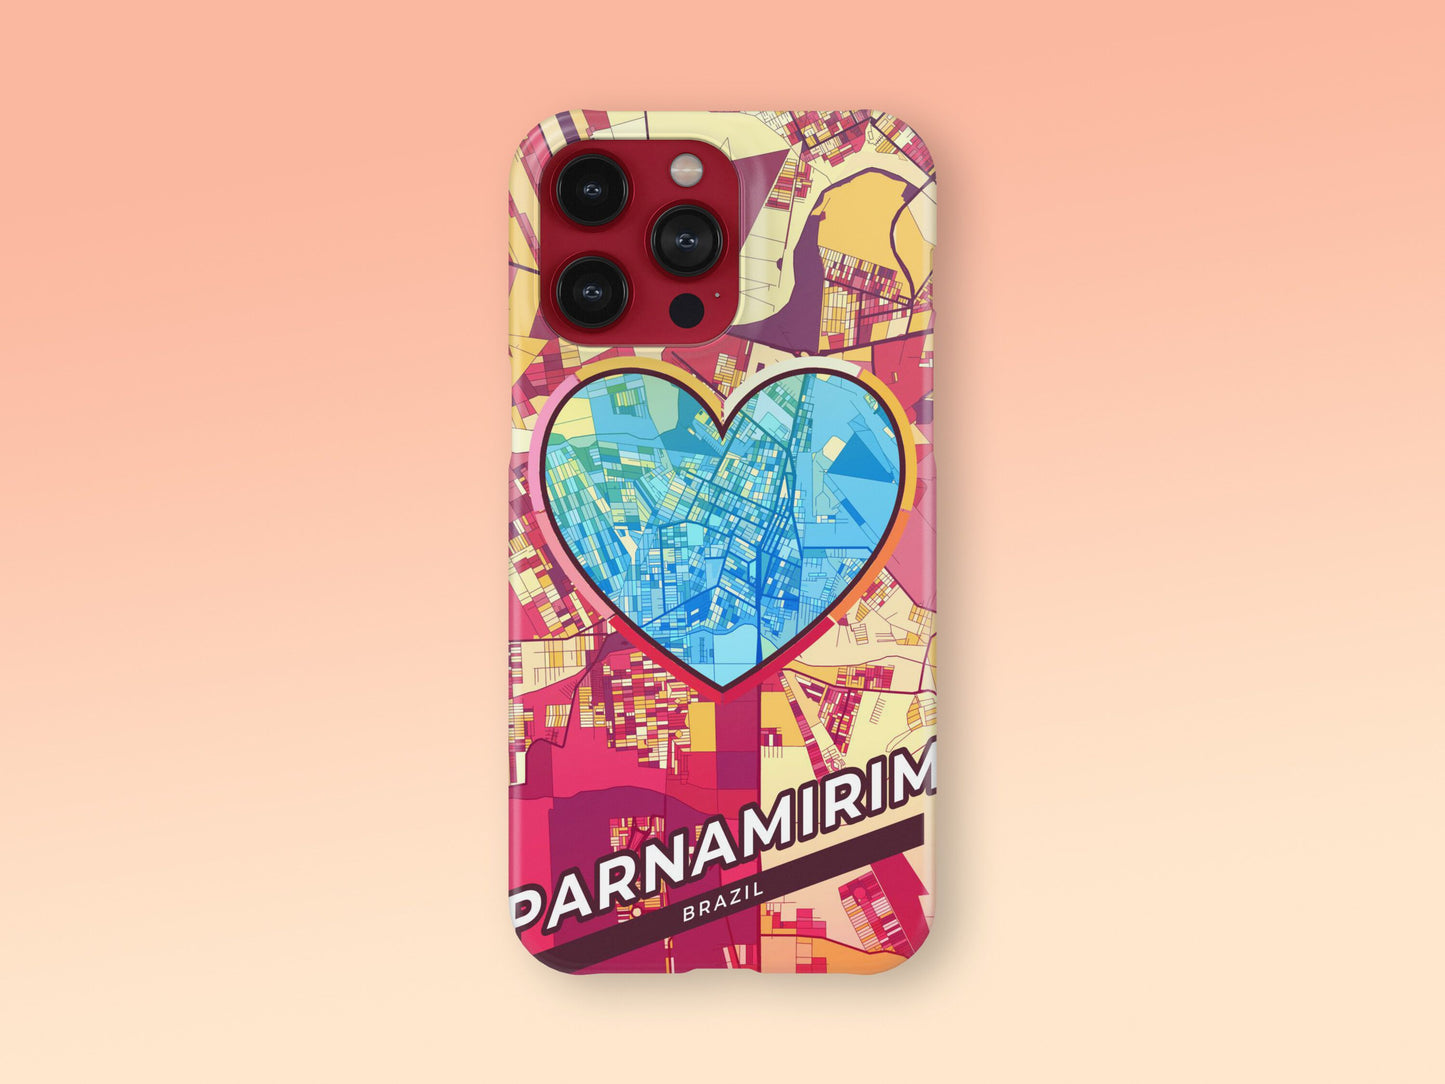 Parnamirim Brazil slim phone case with colorful icon 2